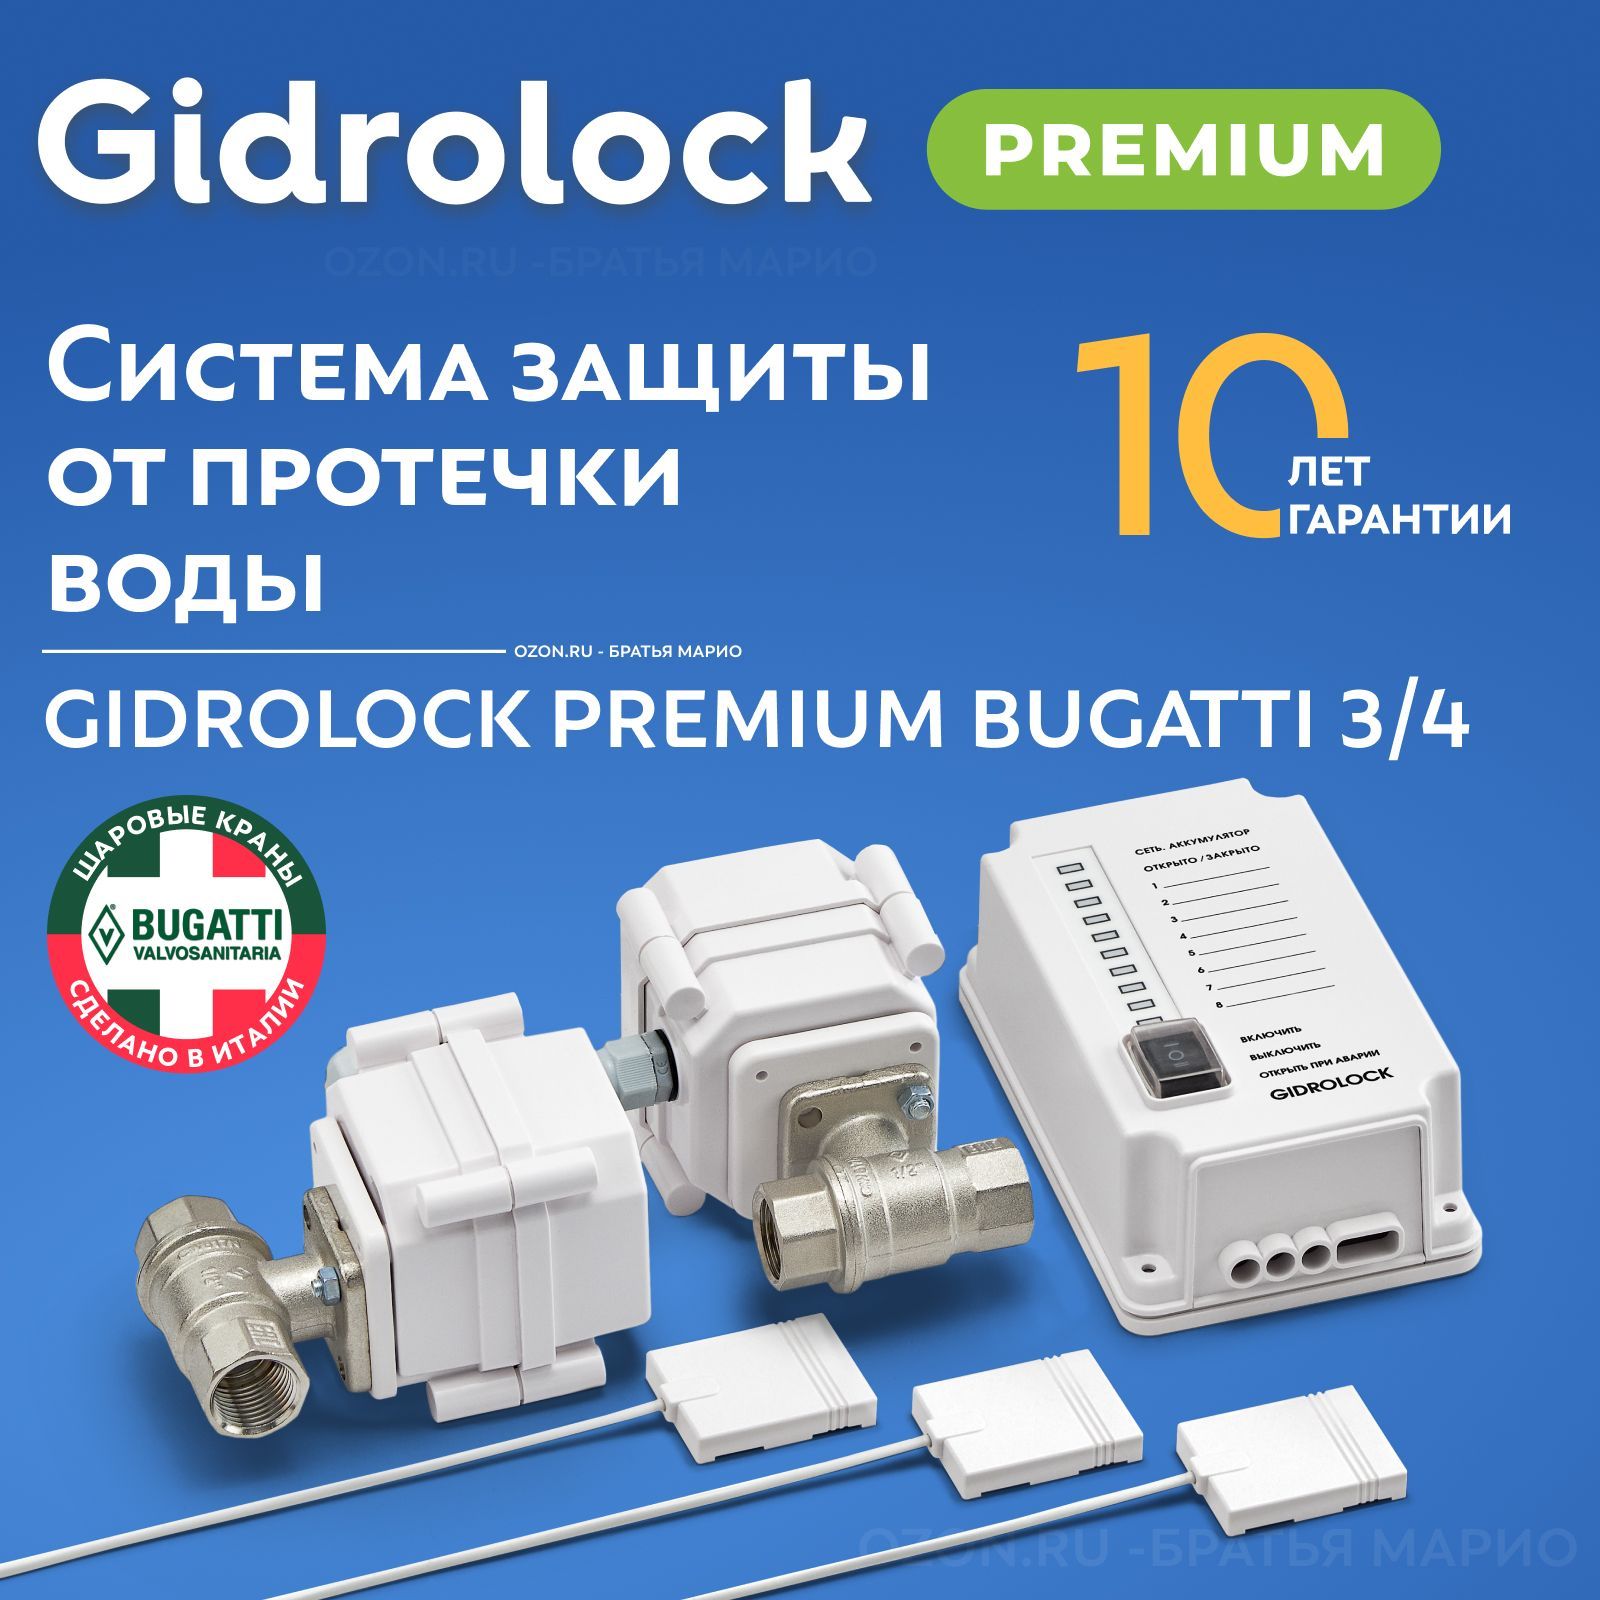 Защита от протечек Гидролок (Gidrolock)